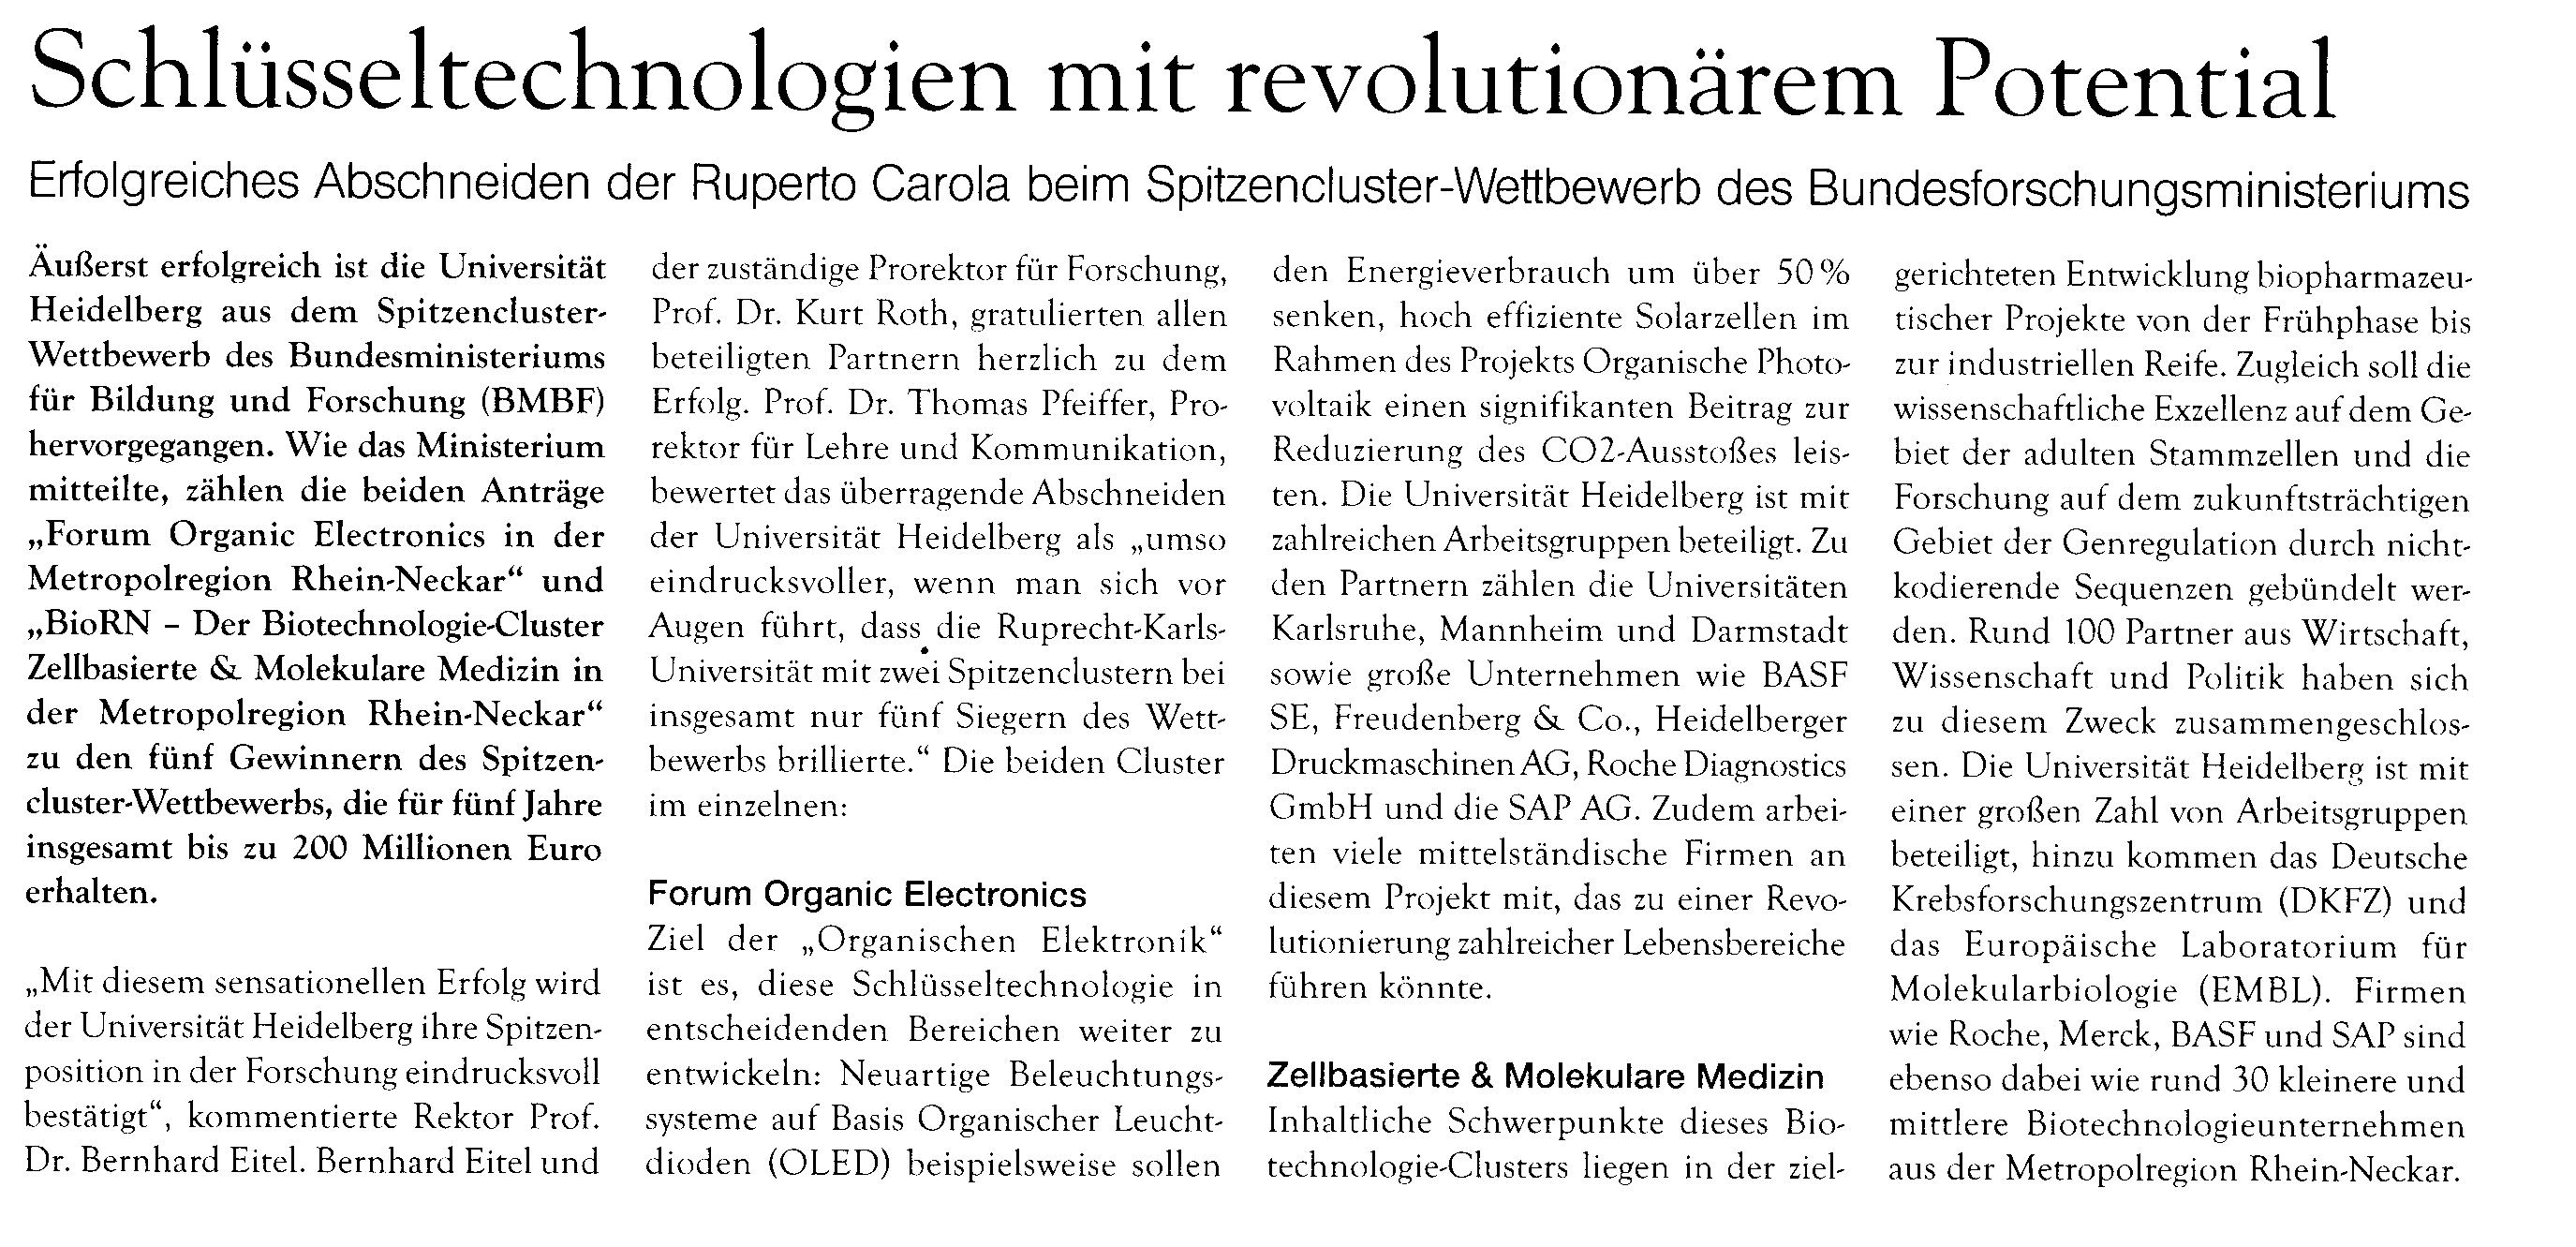 UniSpiegel, Universität Heidelberg, Oct./Nov. 2008, page 1